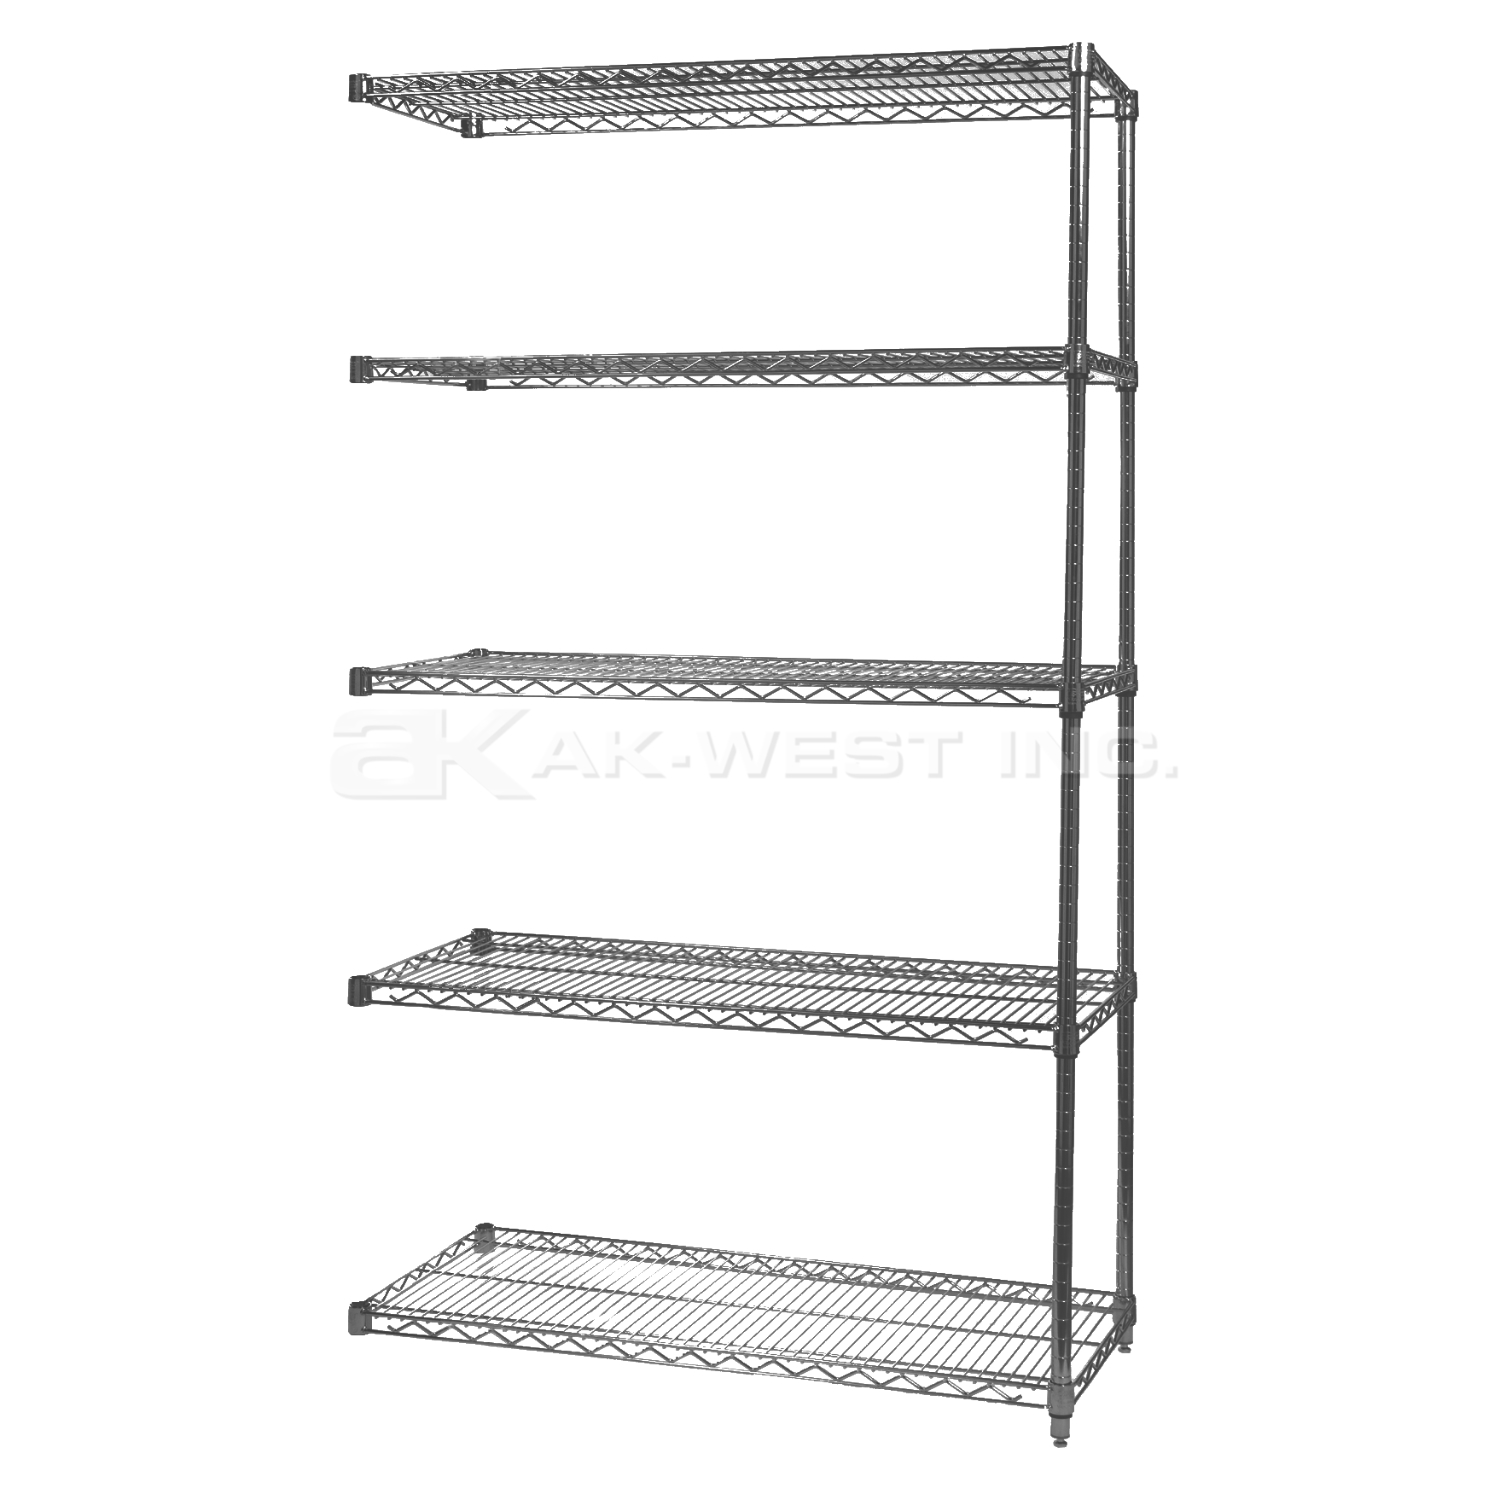 Grey, 18"D x 48"W x 86"H, 5 Shelf, Wire Shelving Adder Kit